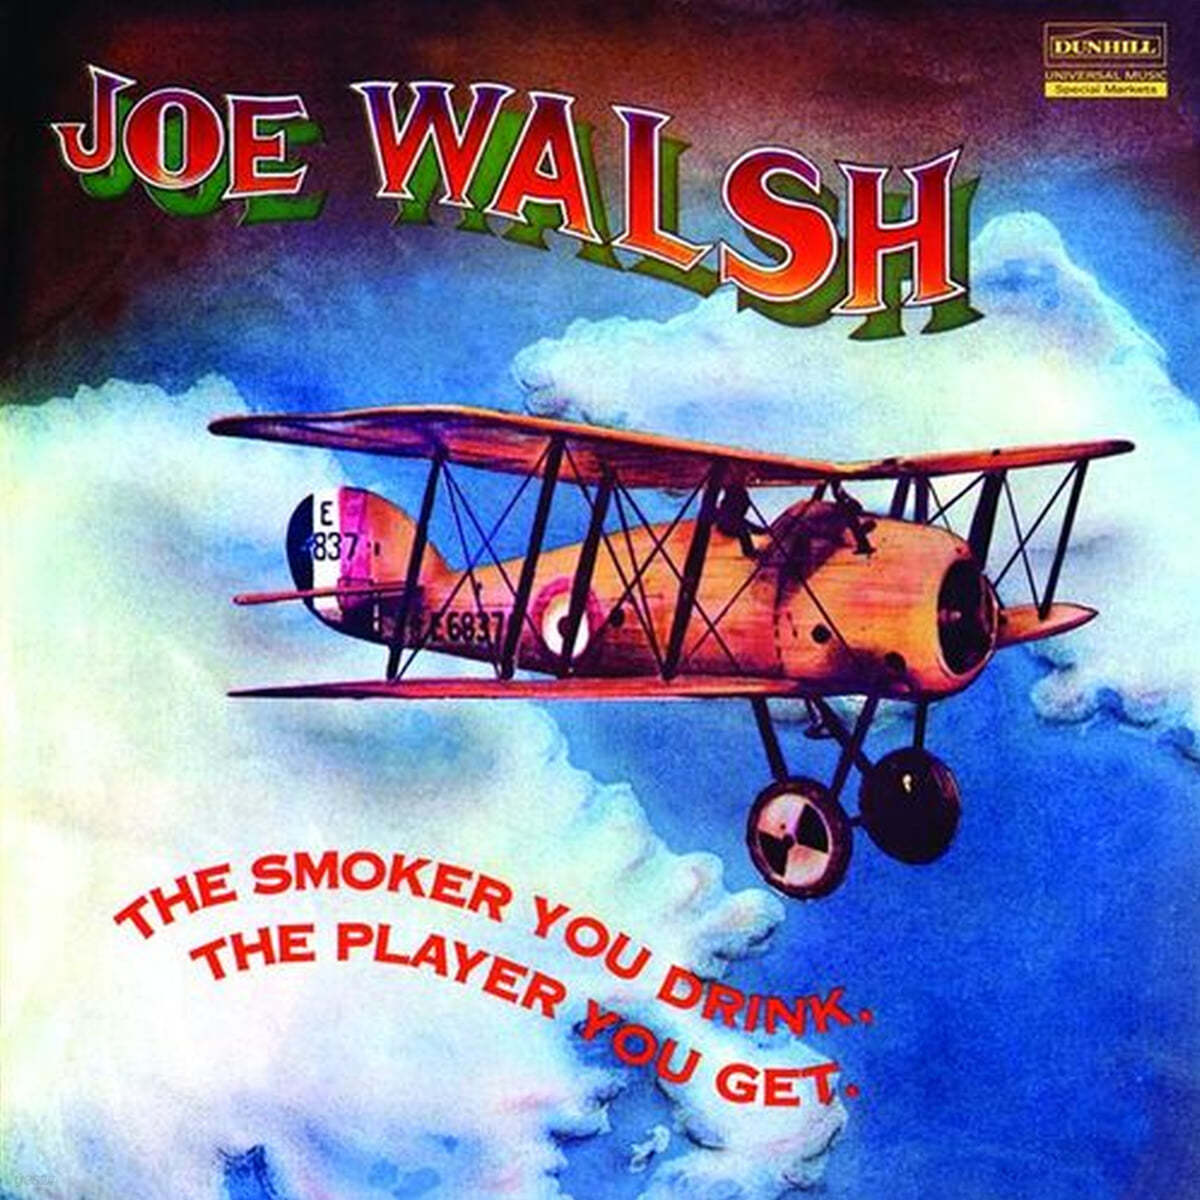 Joe Walsh - Smoker You Drink, The Player You Get [2LP] 